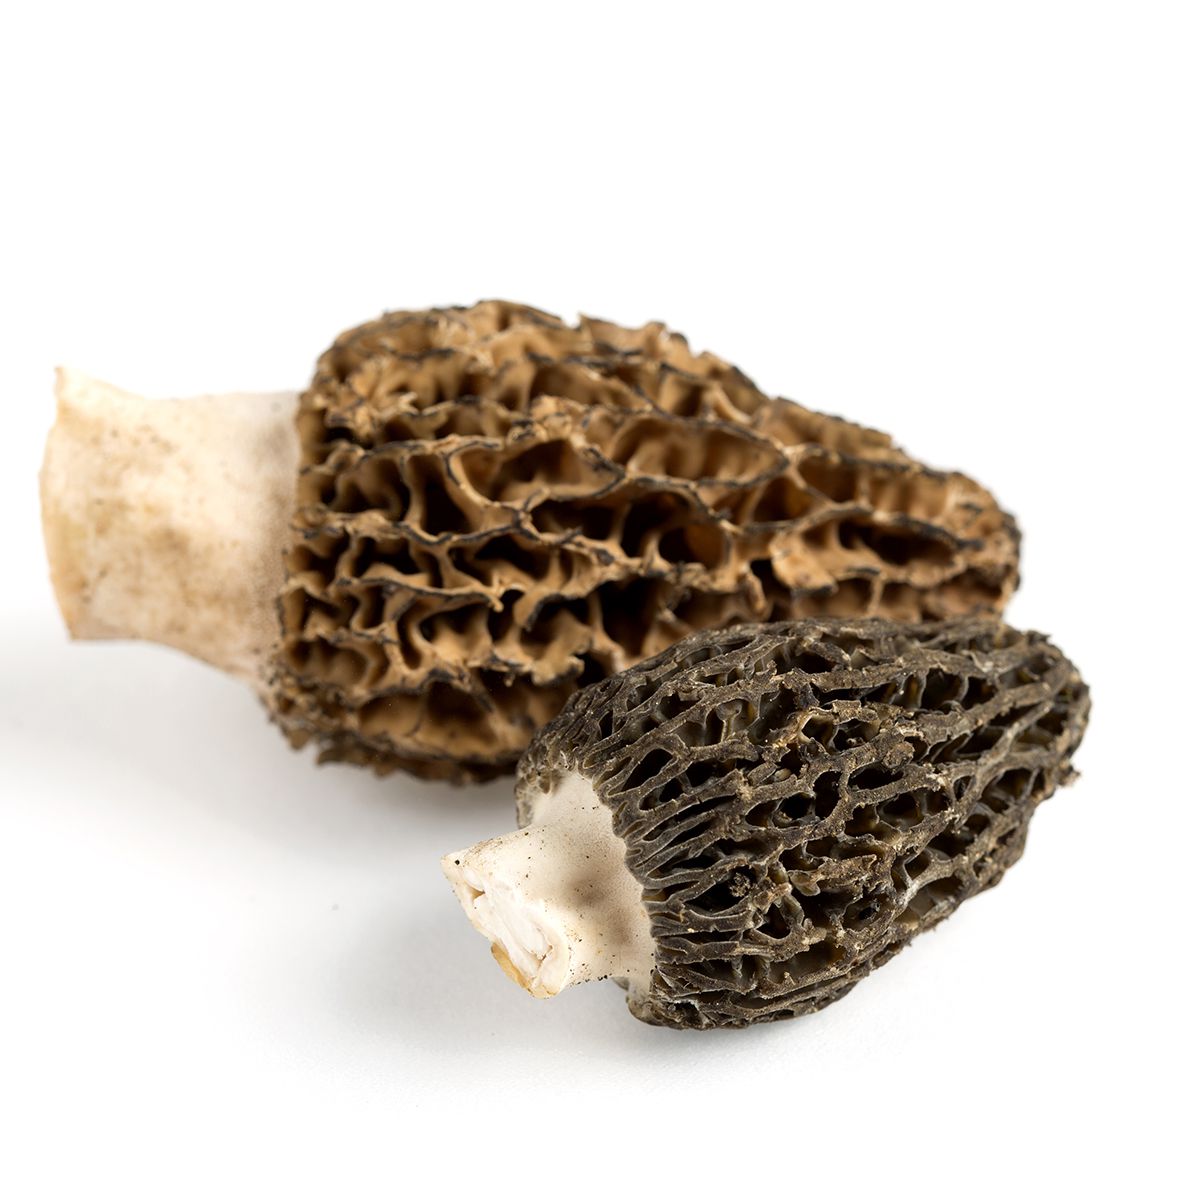 BoxNCase California Morel Mushrooms 3 lb